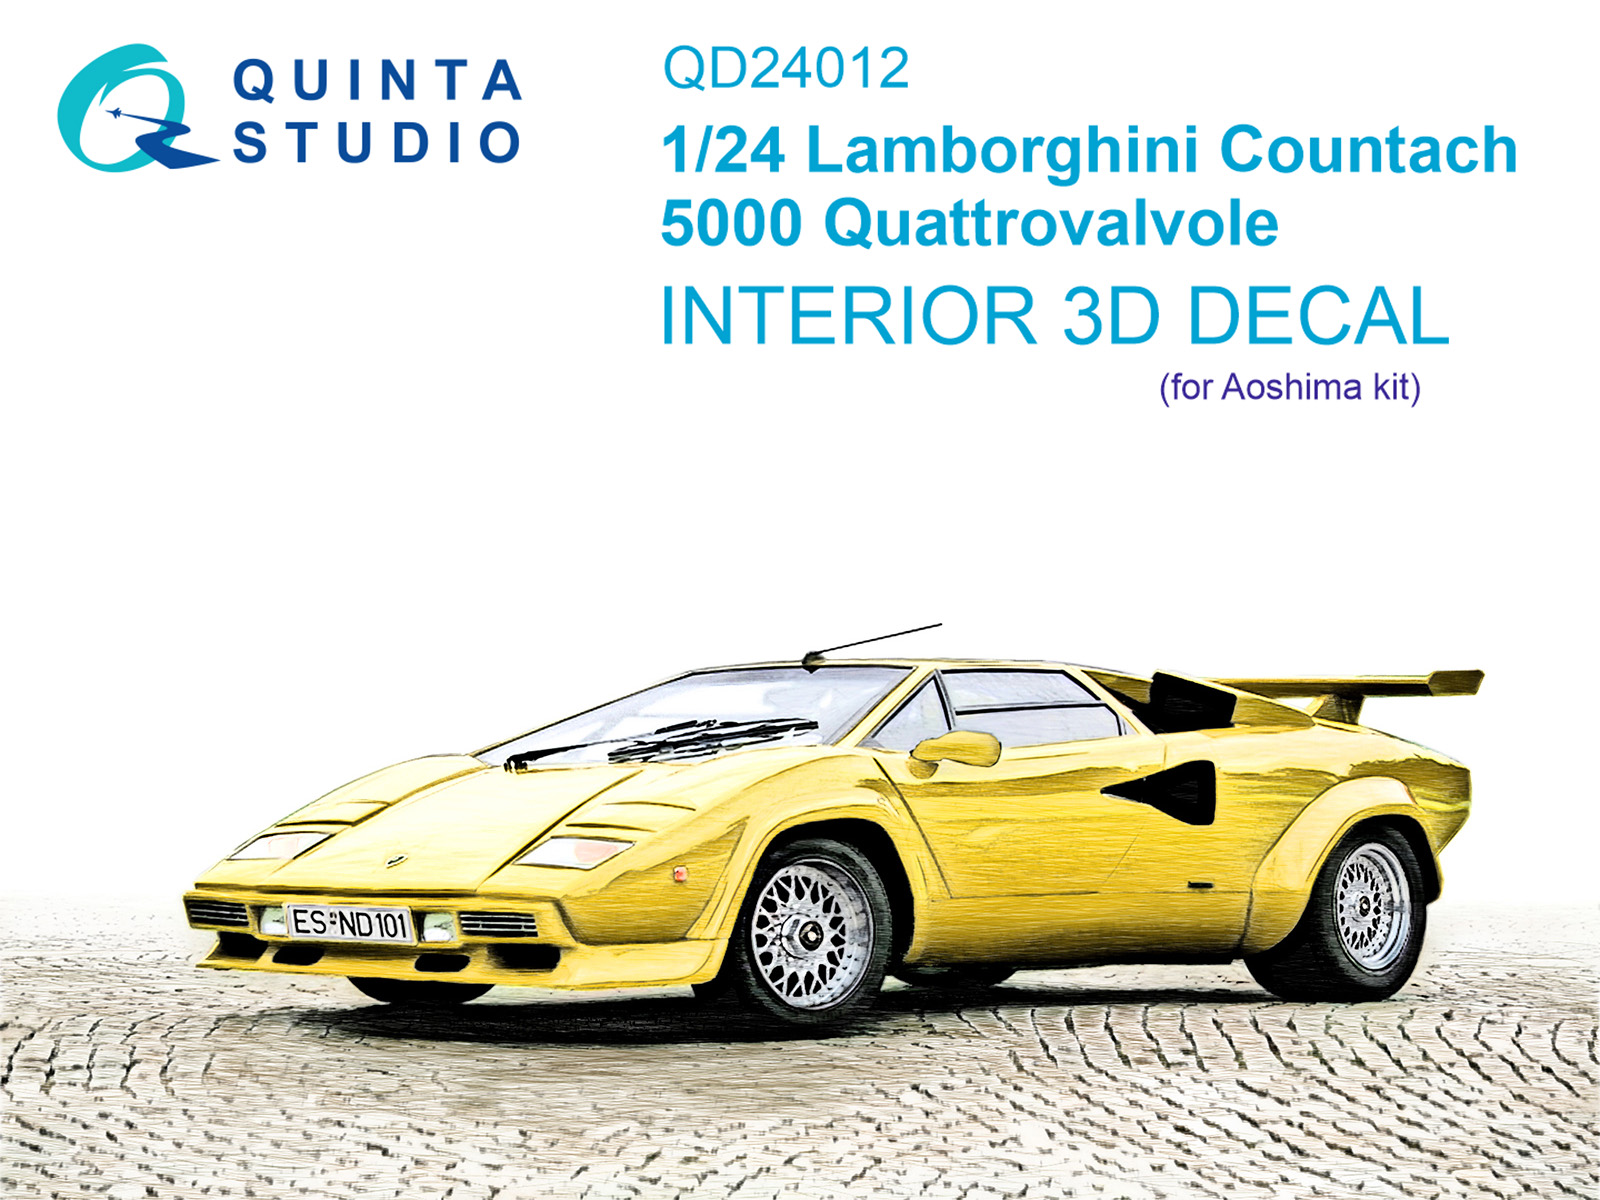 QD24012  декали  3D Декаль интерьера кабины Lamborghini Countach 5000 QV (Aoshima)  (1:24)